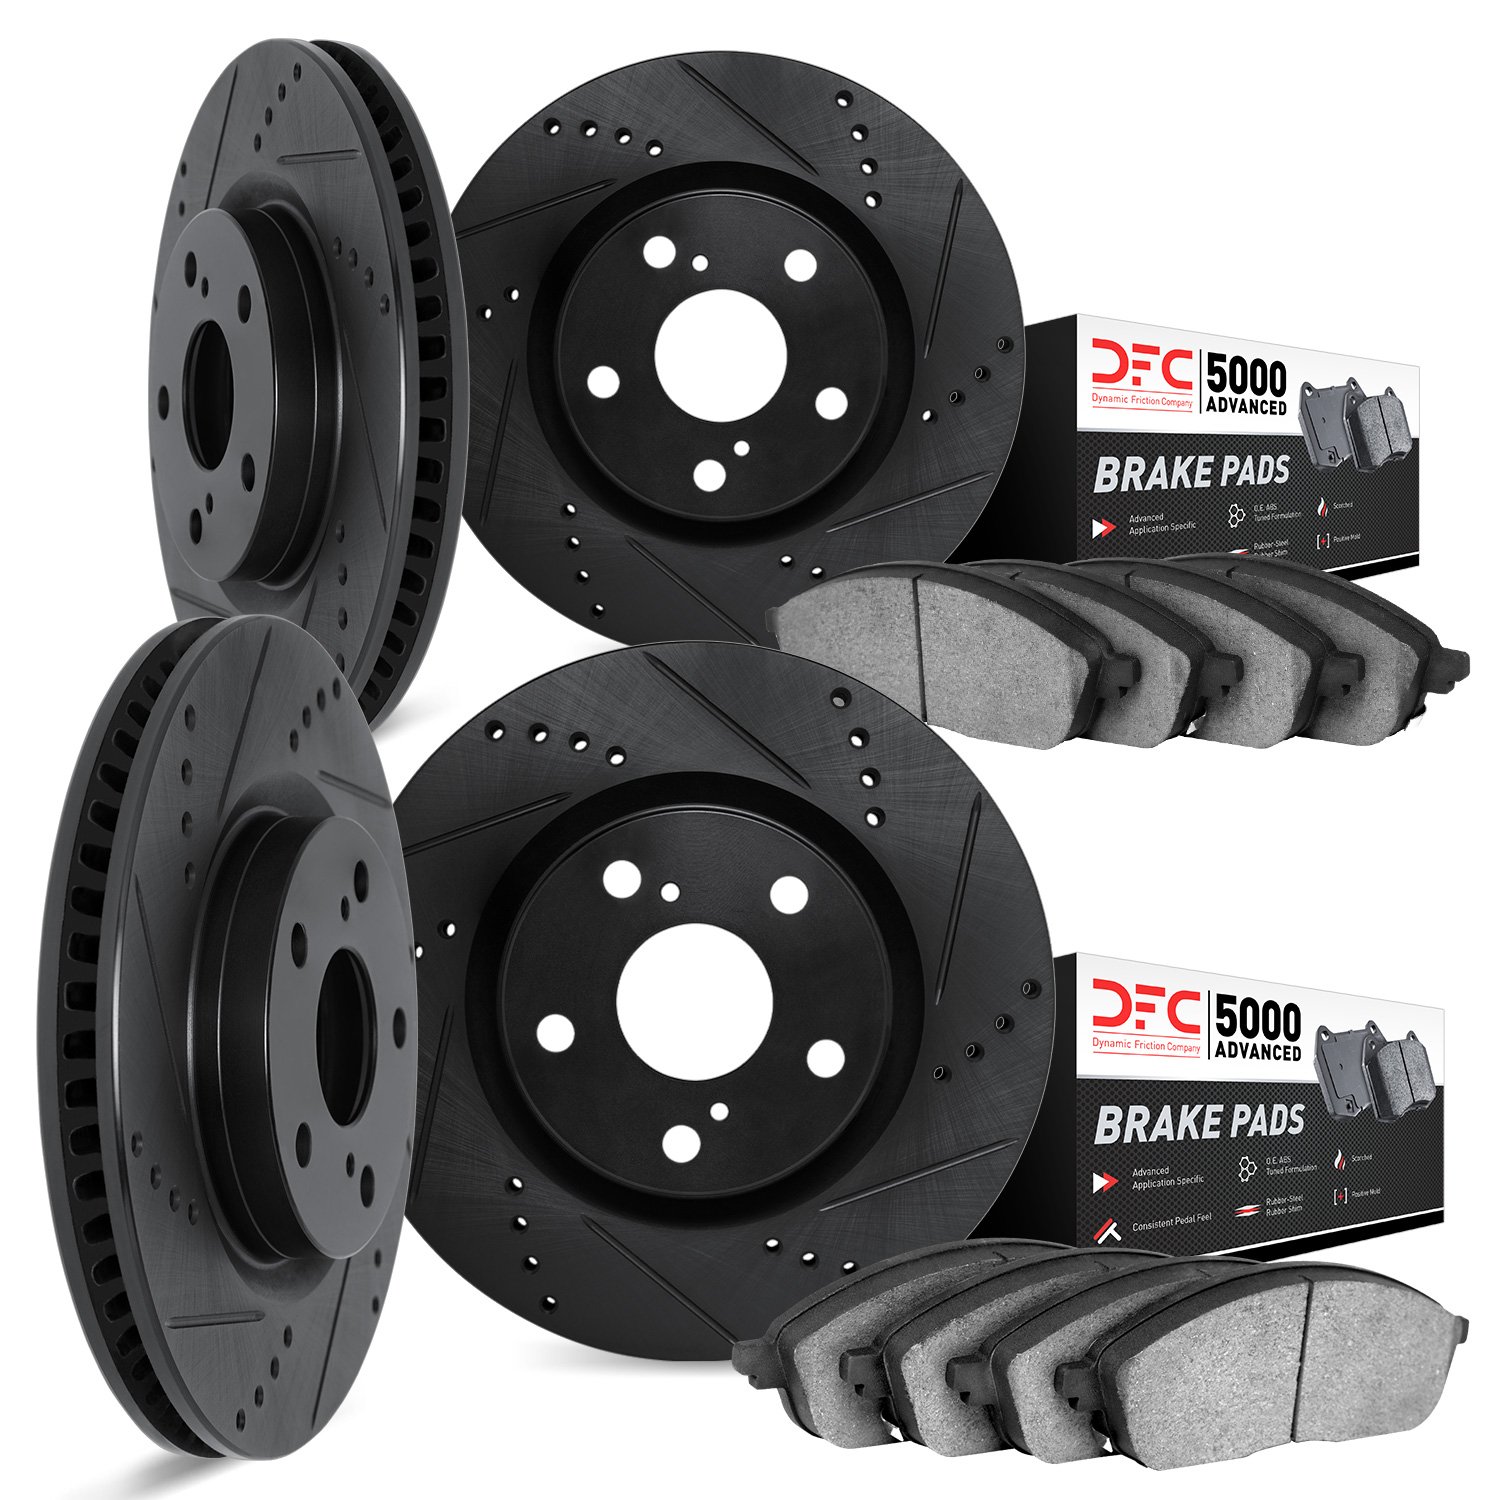 8504-40245 Drilled/Slotted Brake Rotors w/5000 Advanced Brake Pads Kit [Black], 2005-2006 Mopar, Position: Front and Rear